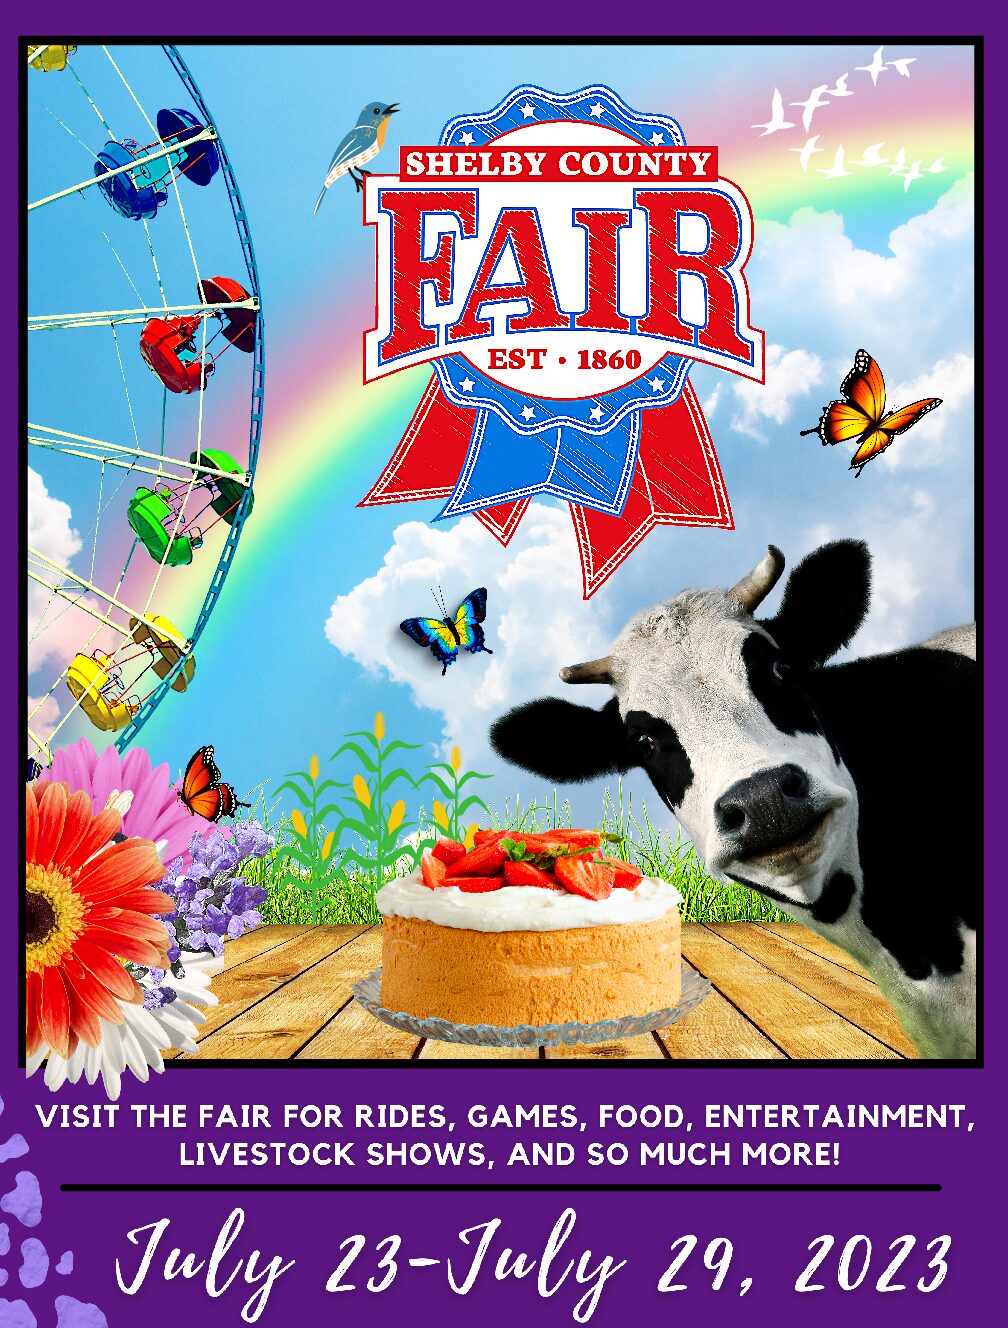 Shelby County Fair Fun Times are Ahead